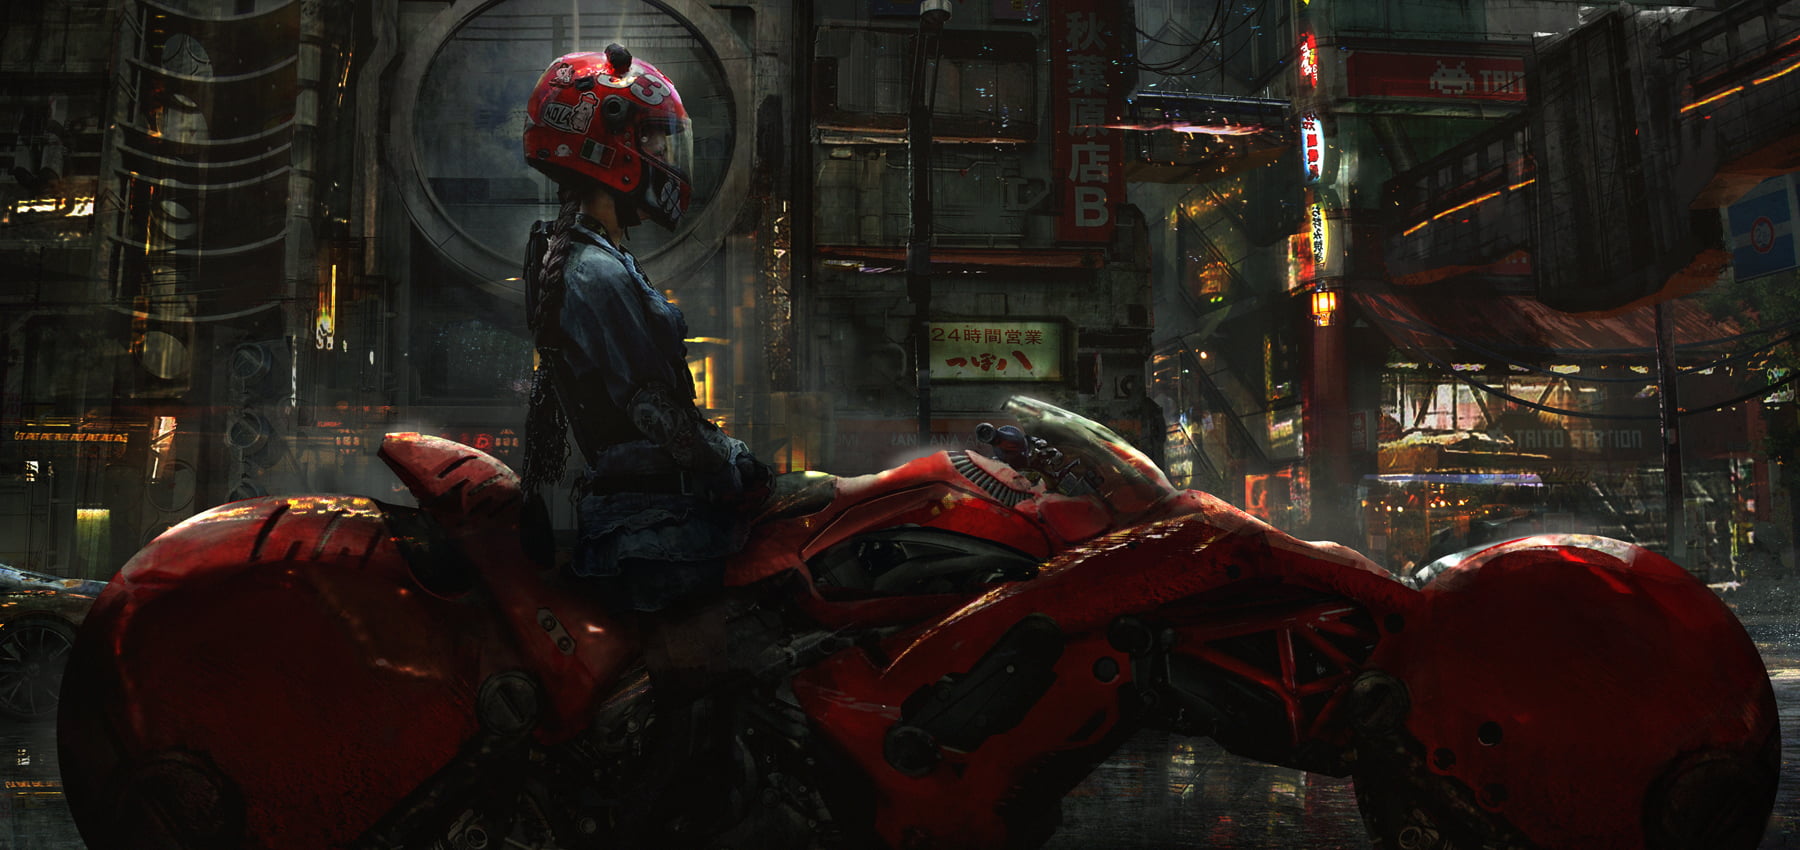 Cyberpunk Female, artwork, motorcycle, land vehicle, creativity